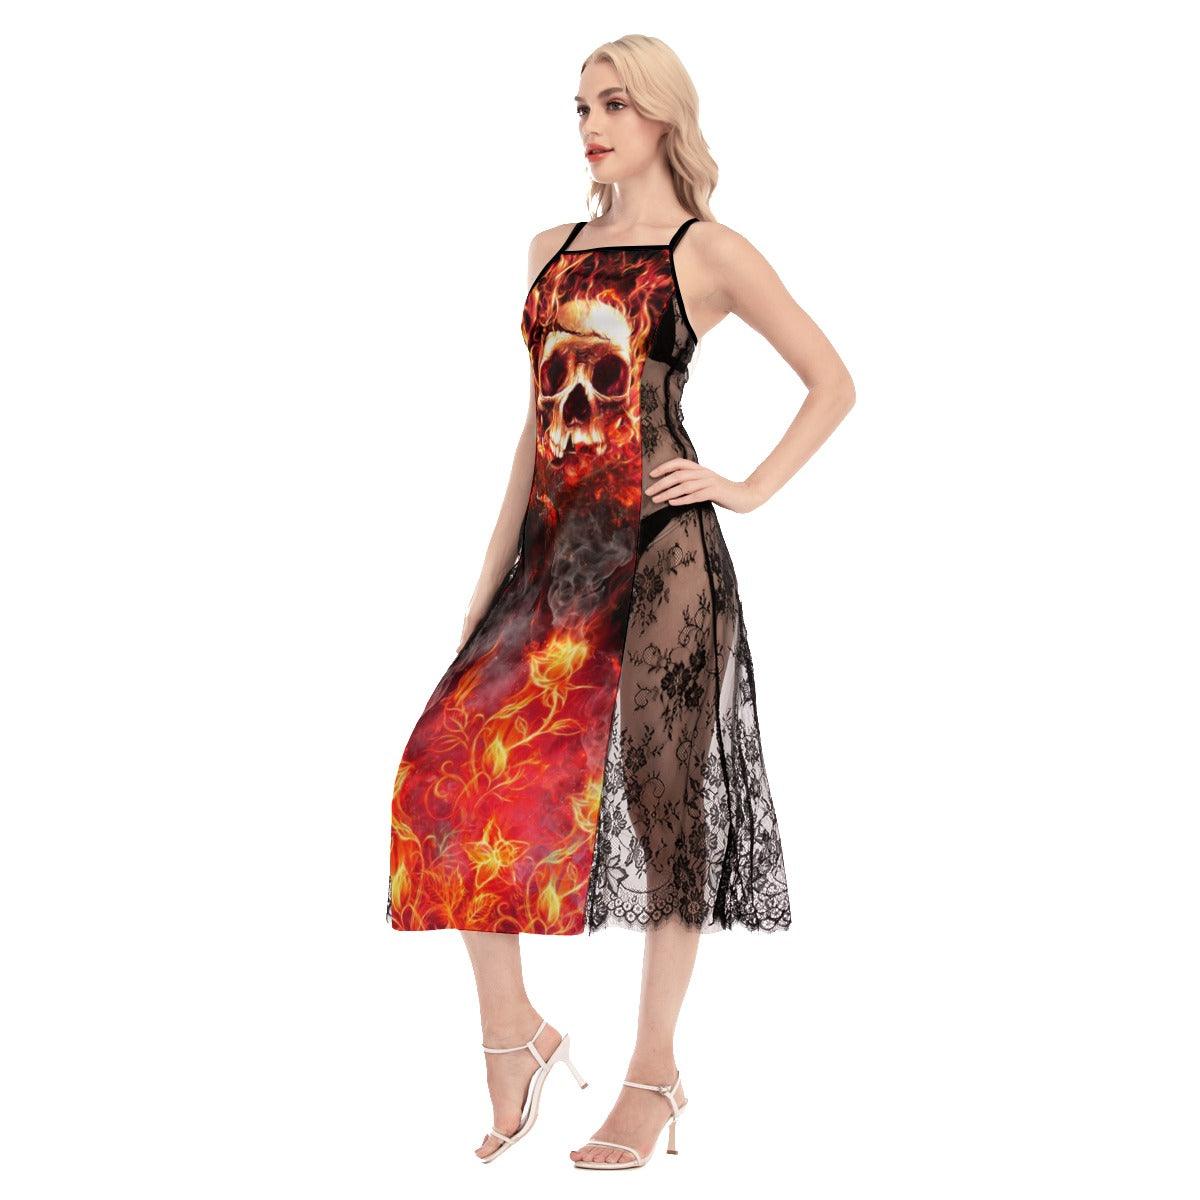 Hot Fire Skull Pattern Lace Cami Cross Back Women Dress - Wonder Skull